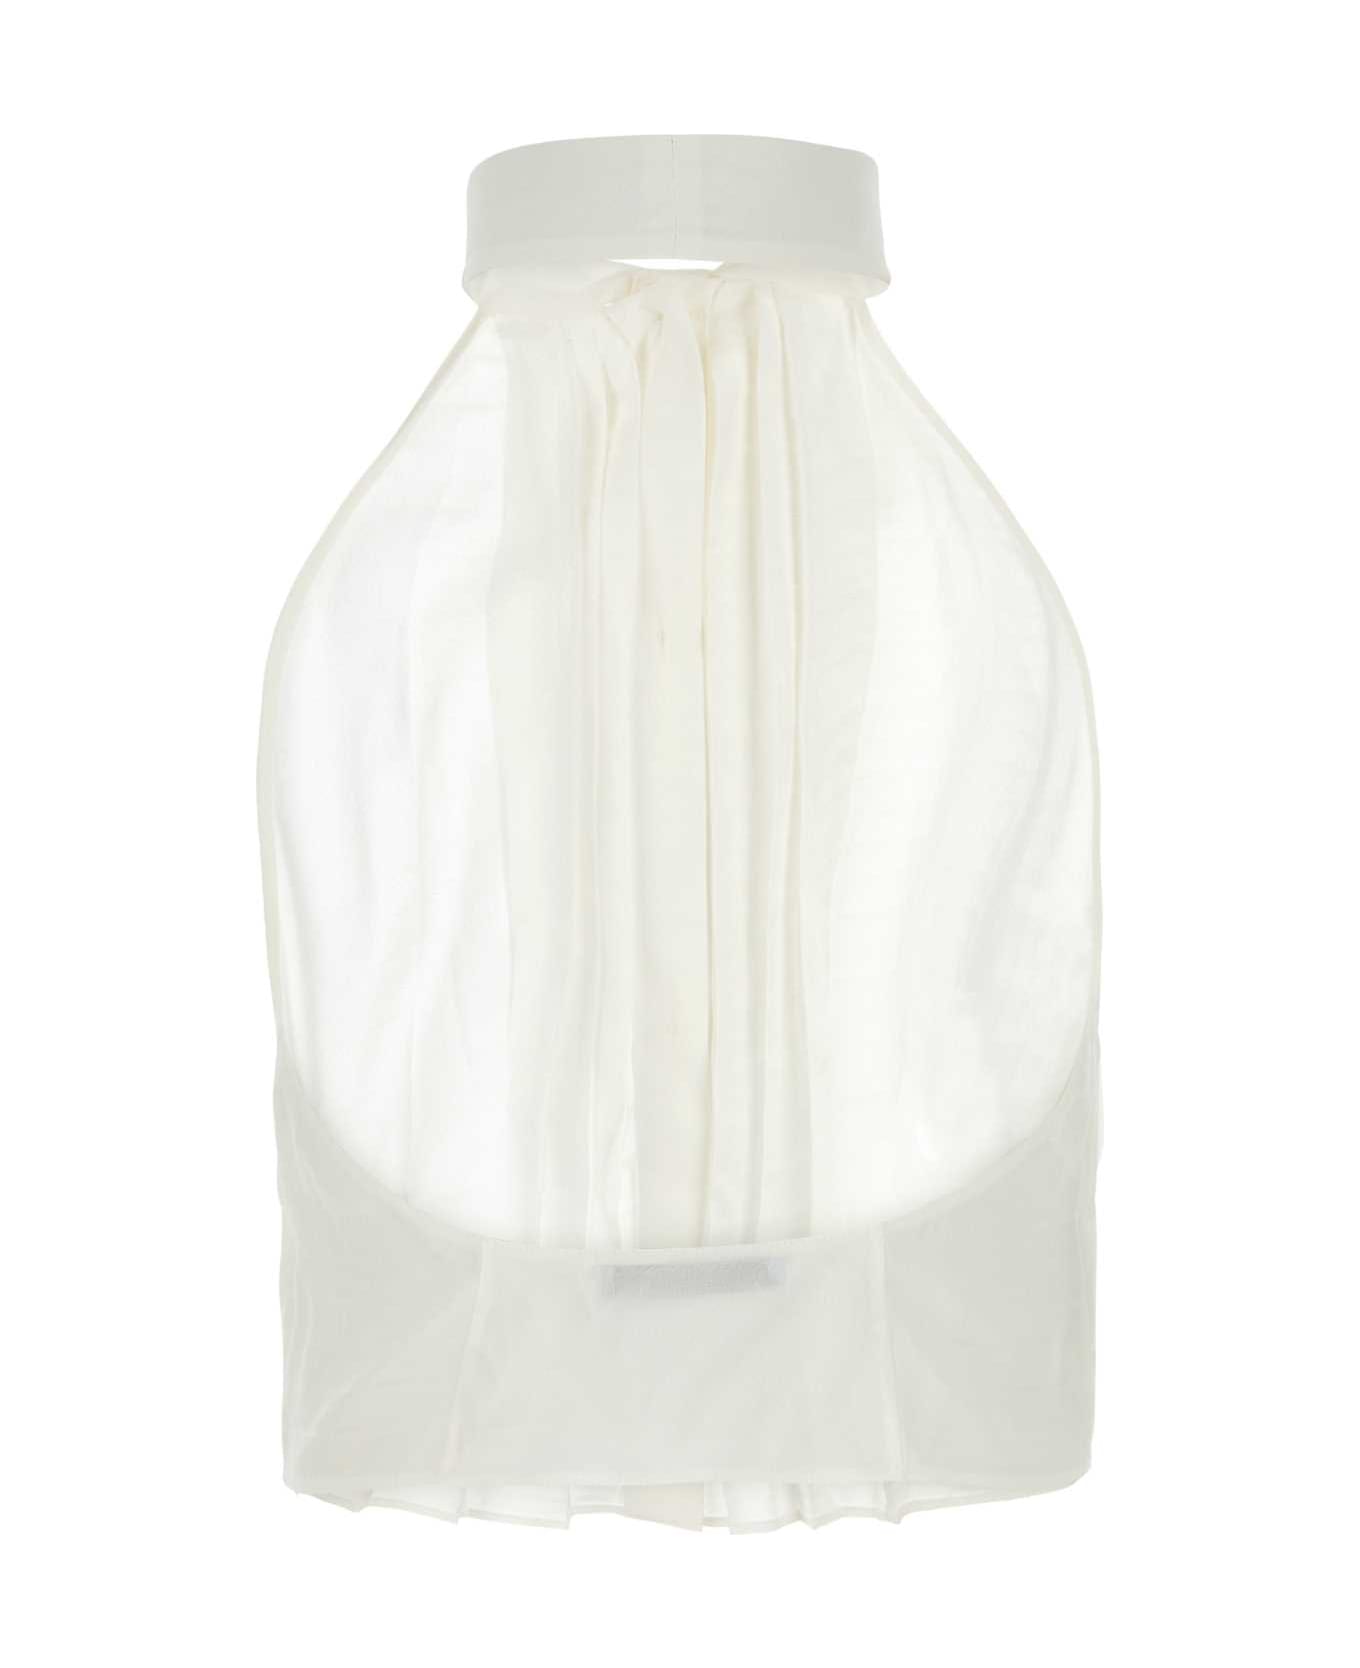 Prada White Silk Top - BIANCO